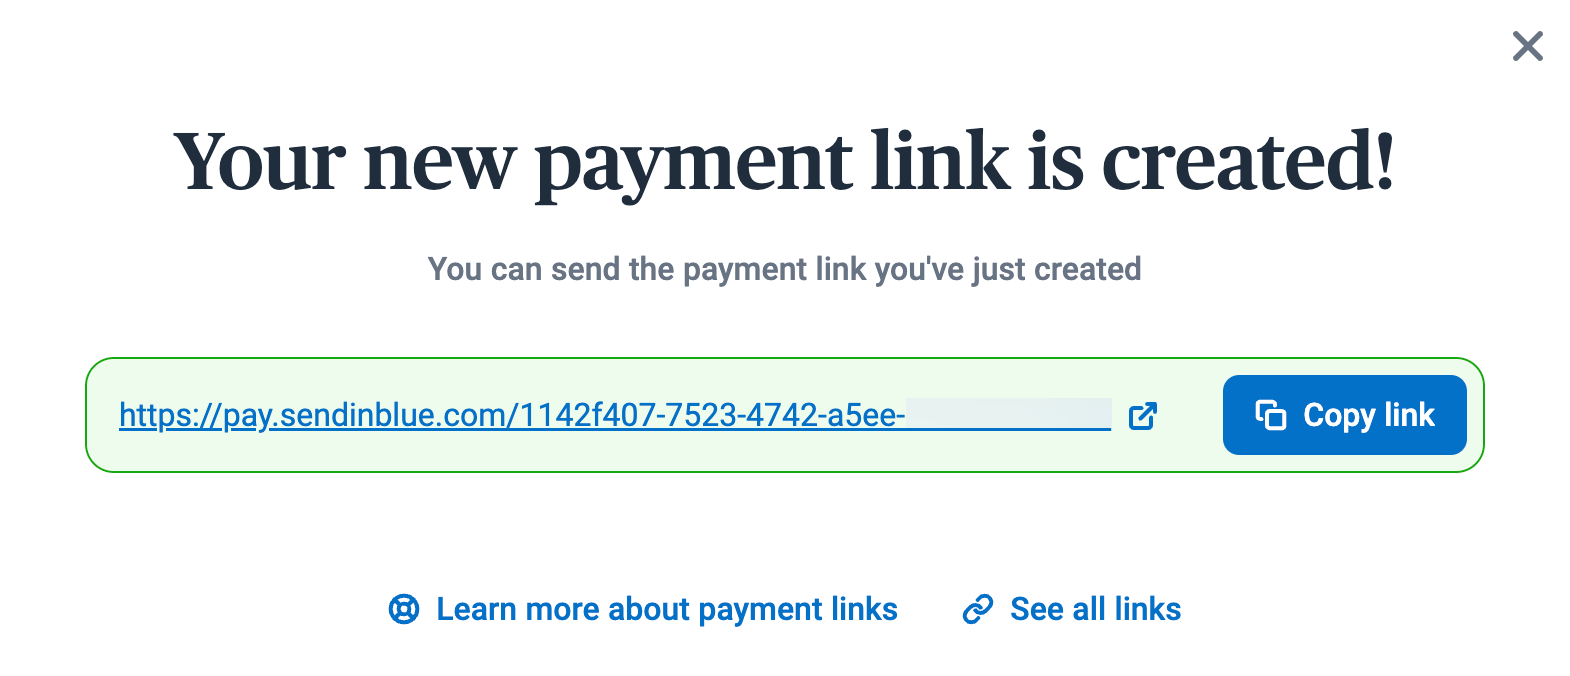 payment_link-created_EN-US.png